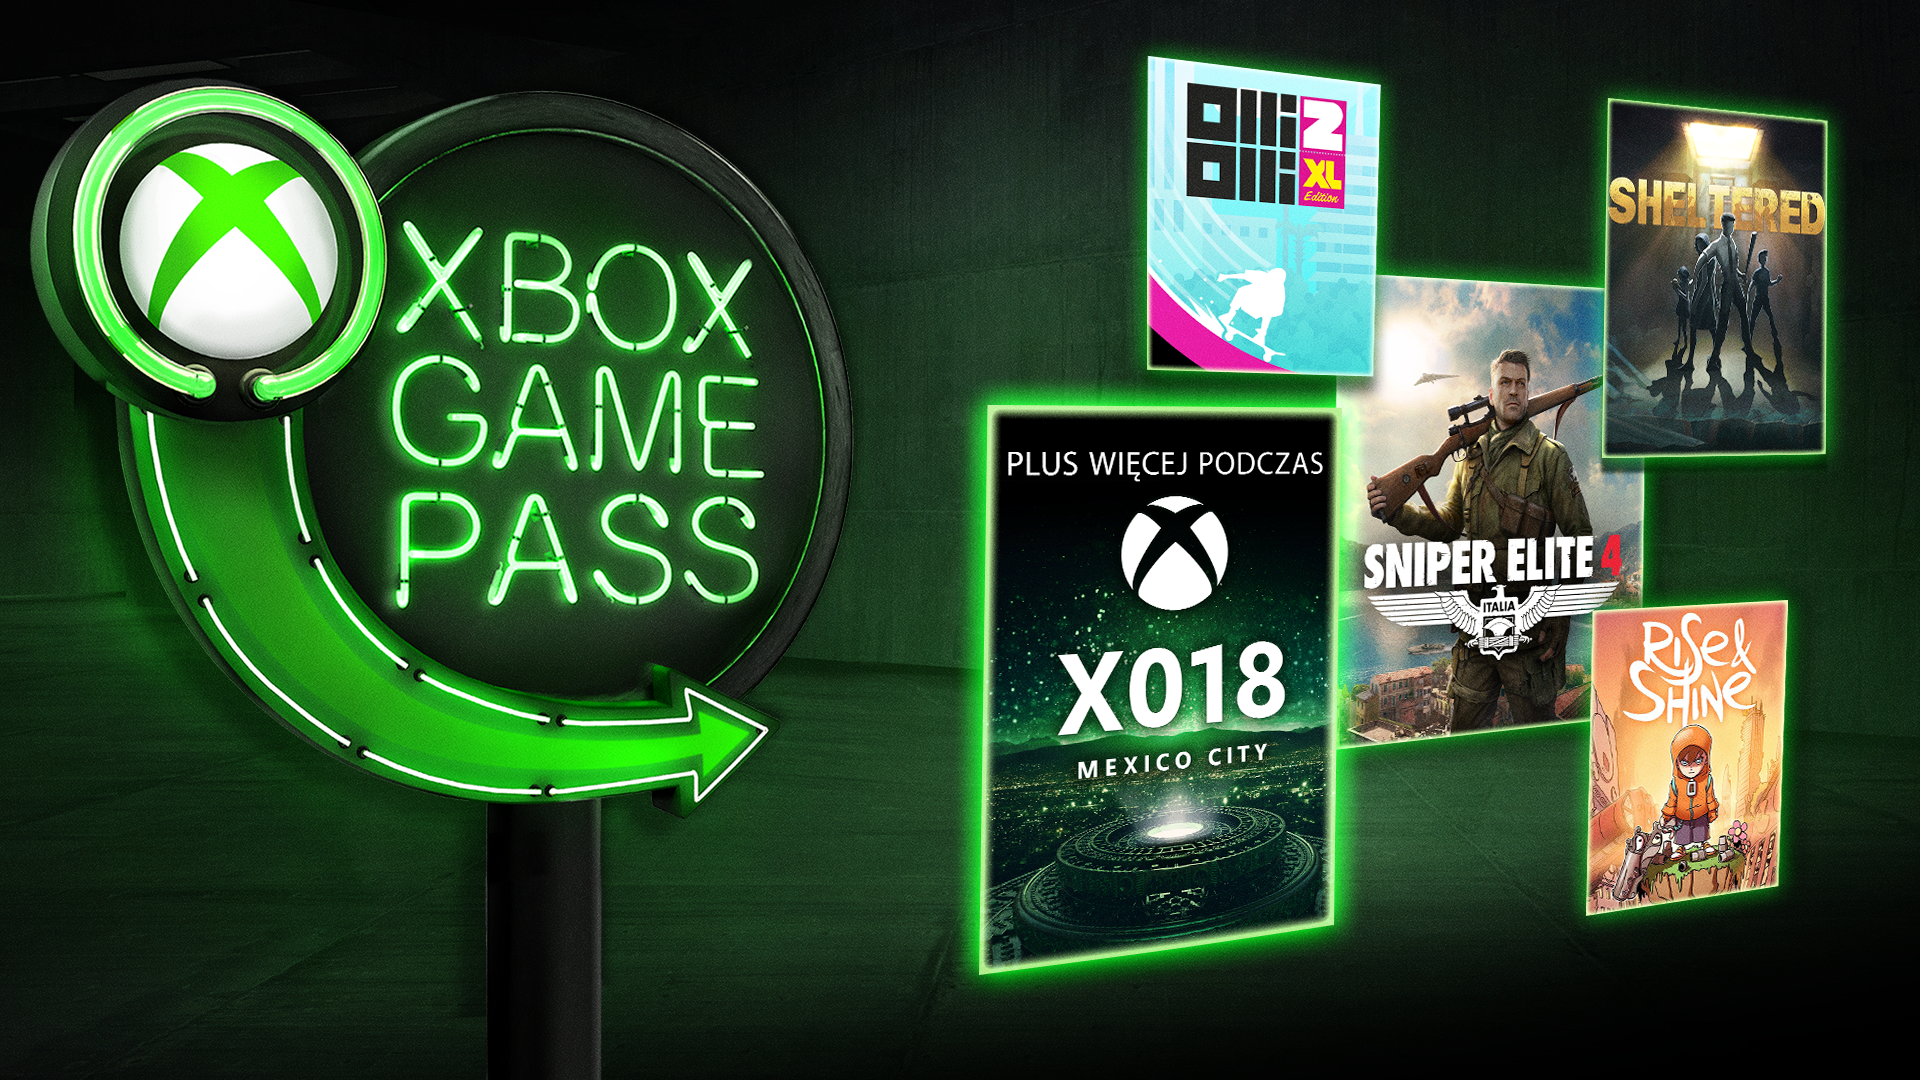 Xbox game Pass. Карта для активации Xbox game Pass. Карта USA для Xbox game Pass. Карта США для активации Xbox game Pass.